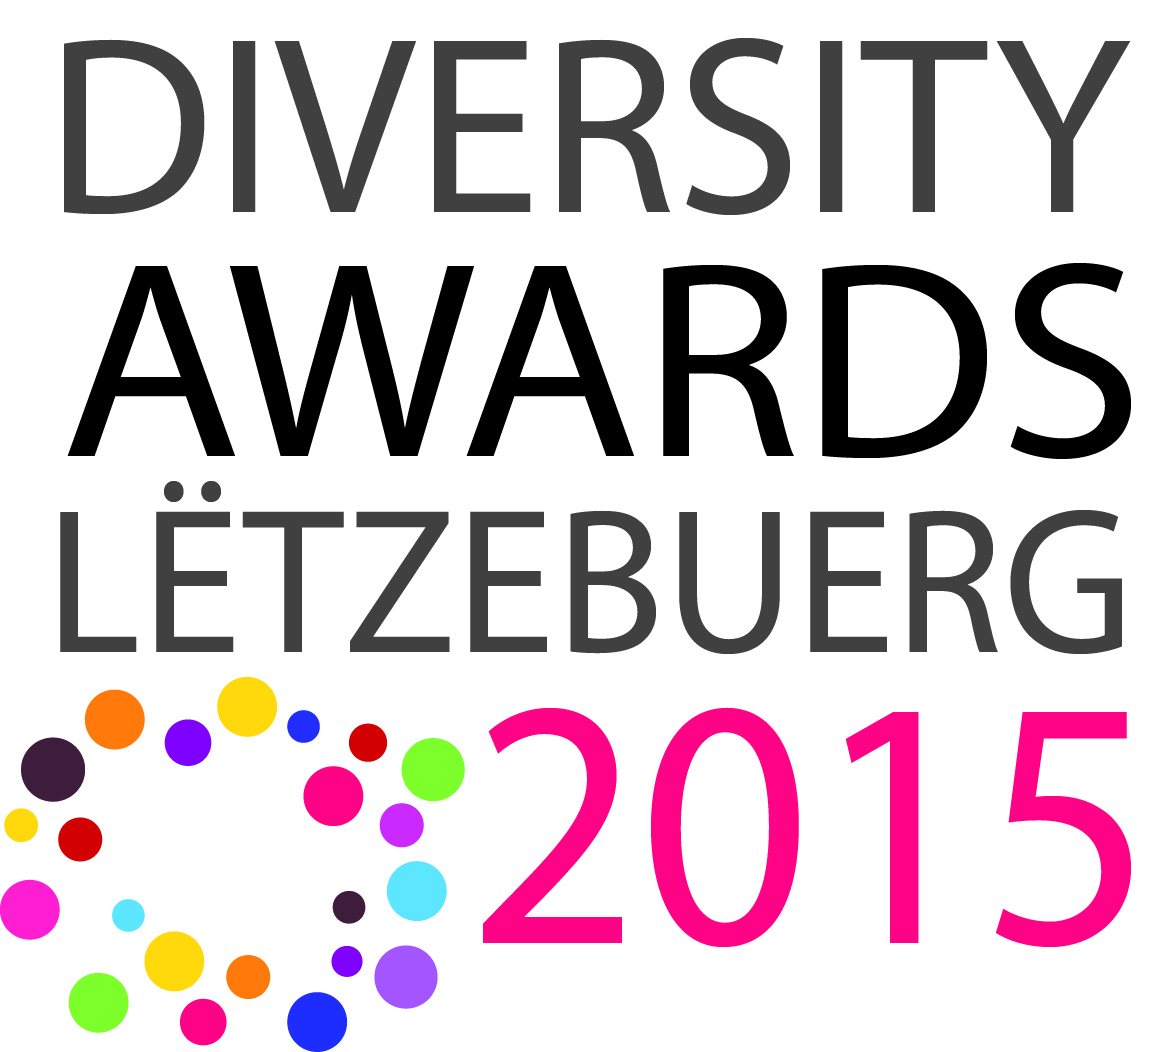 Diversity awards